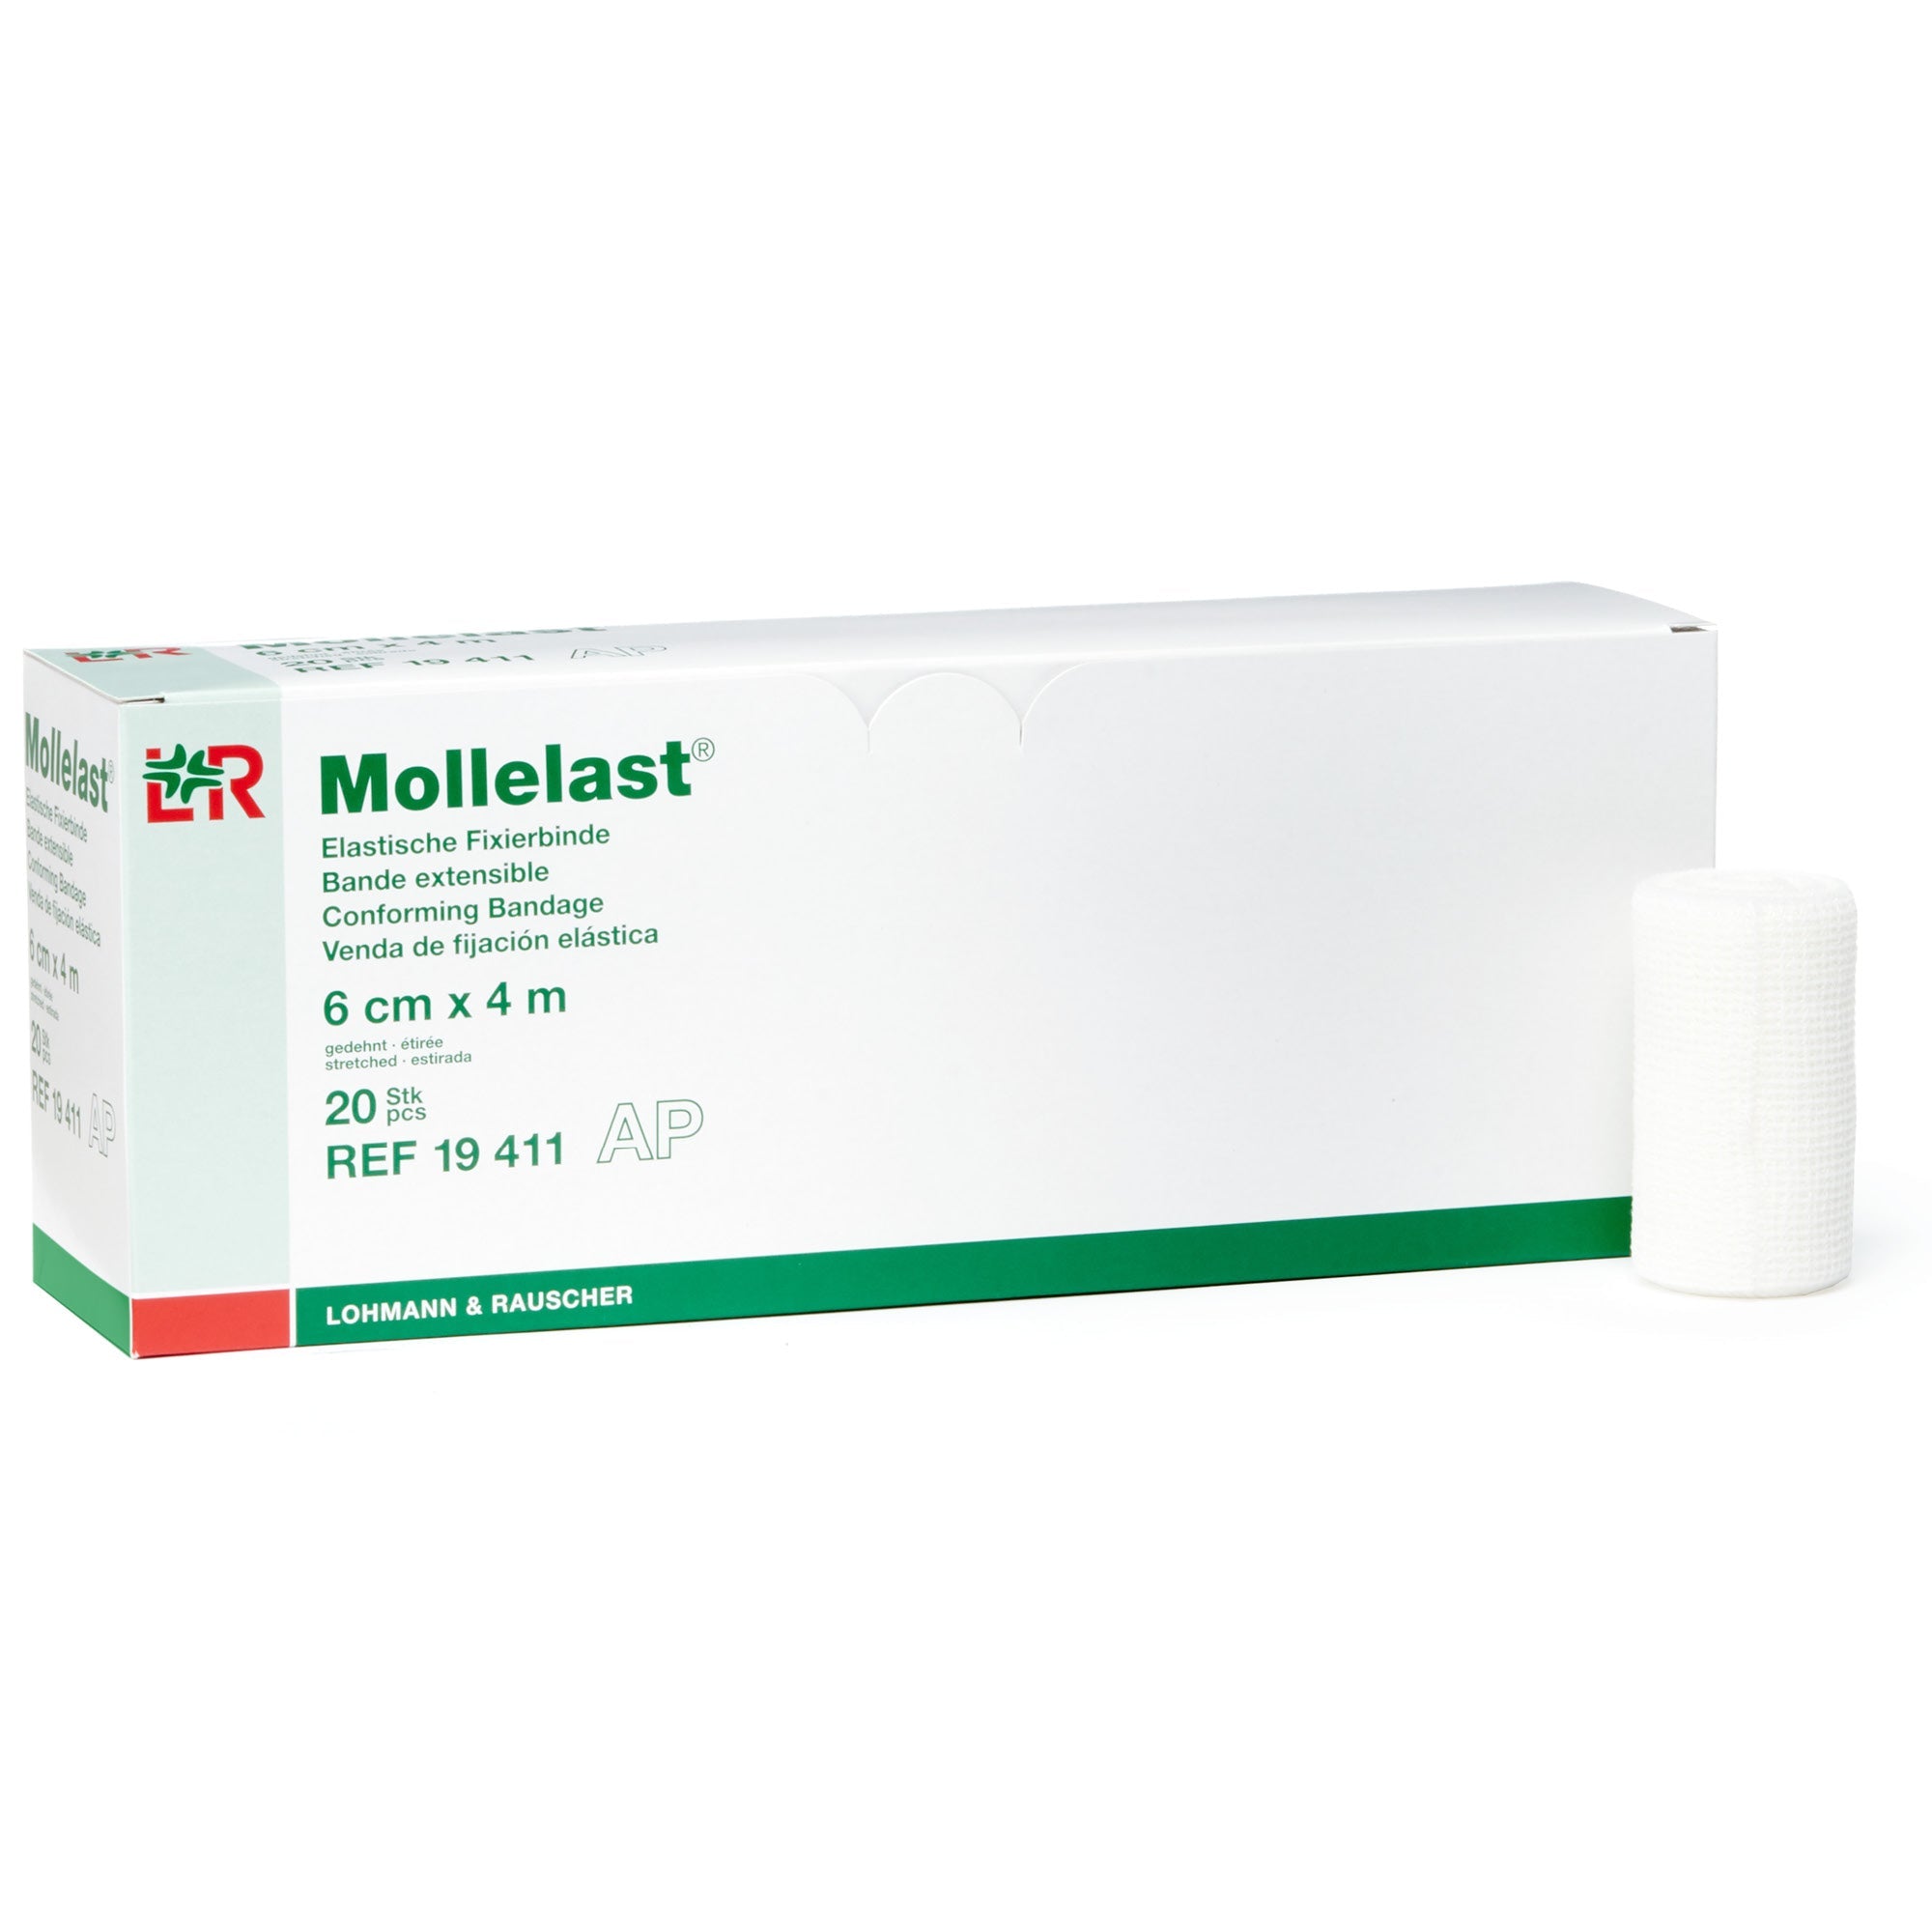 L&R Mollelast® Conforming Bandage, 6 cm x 4 m